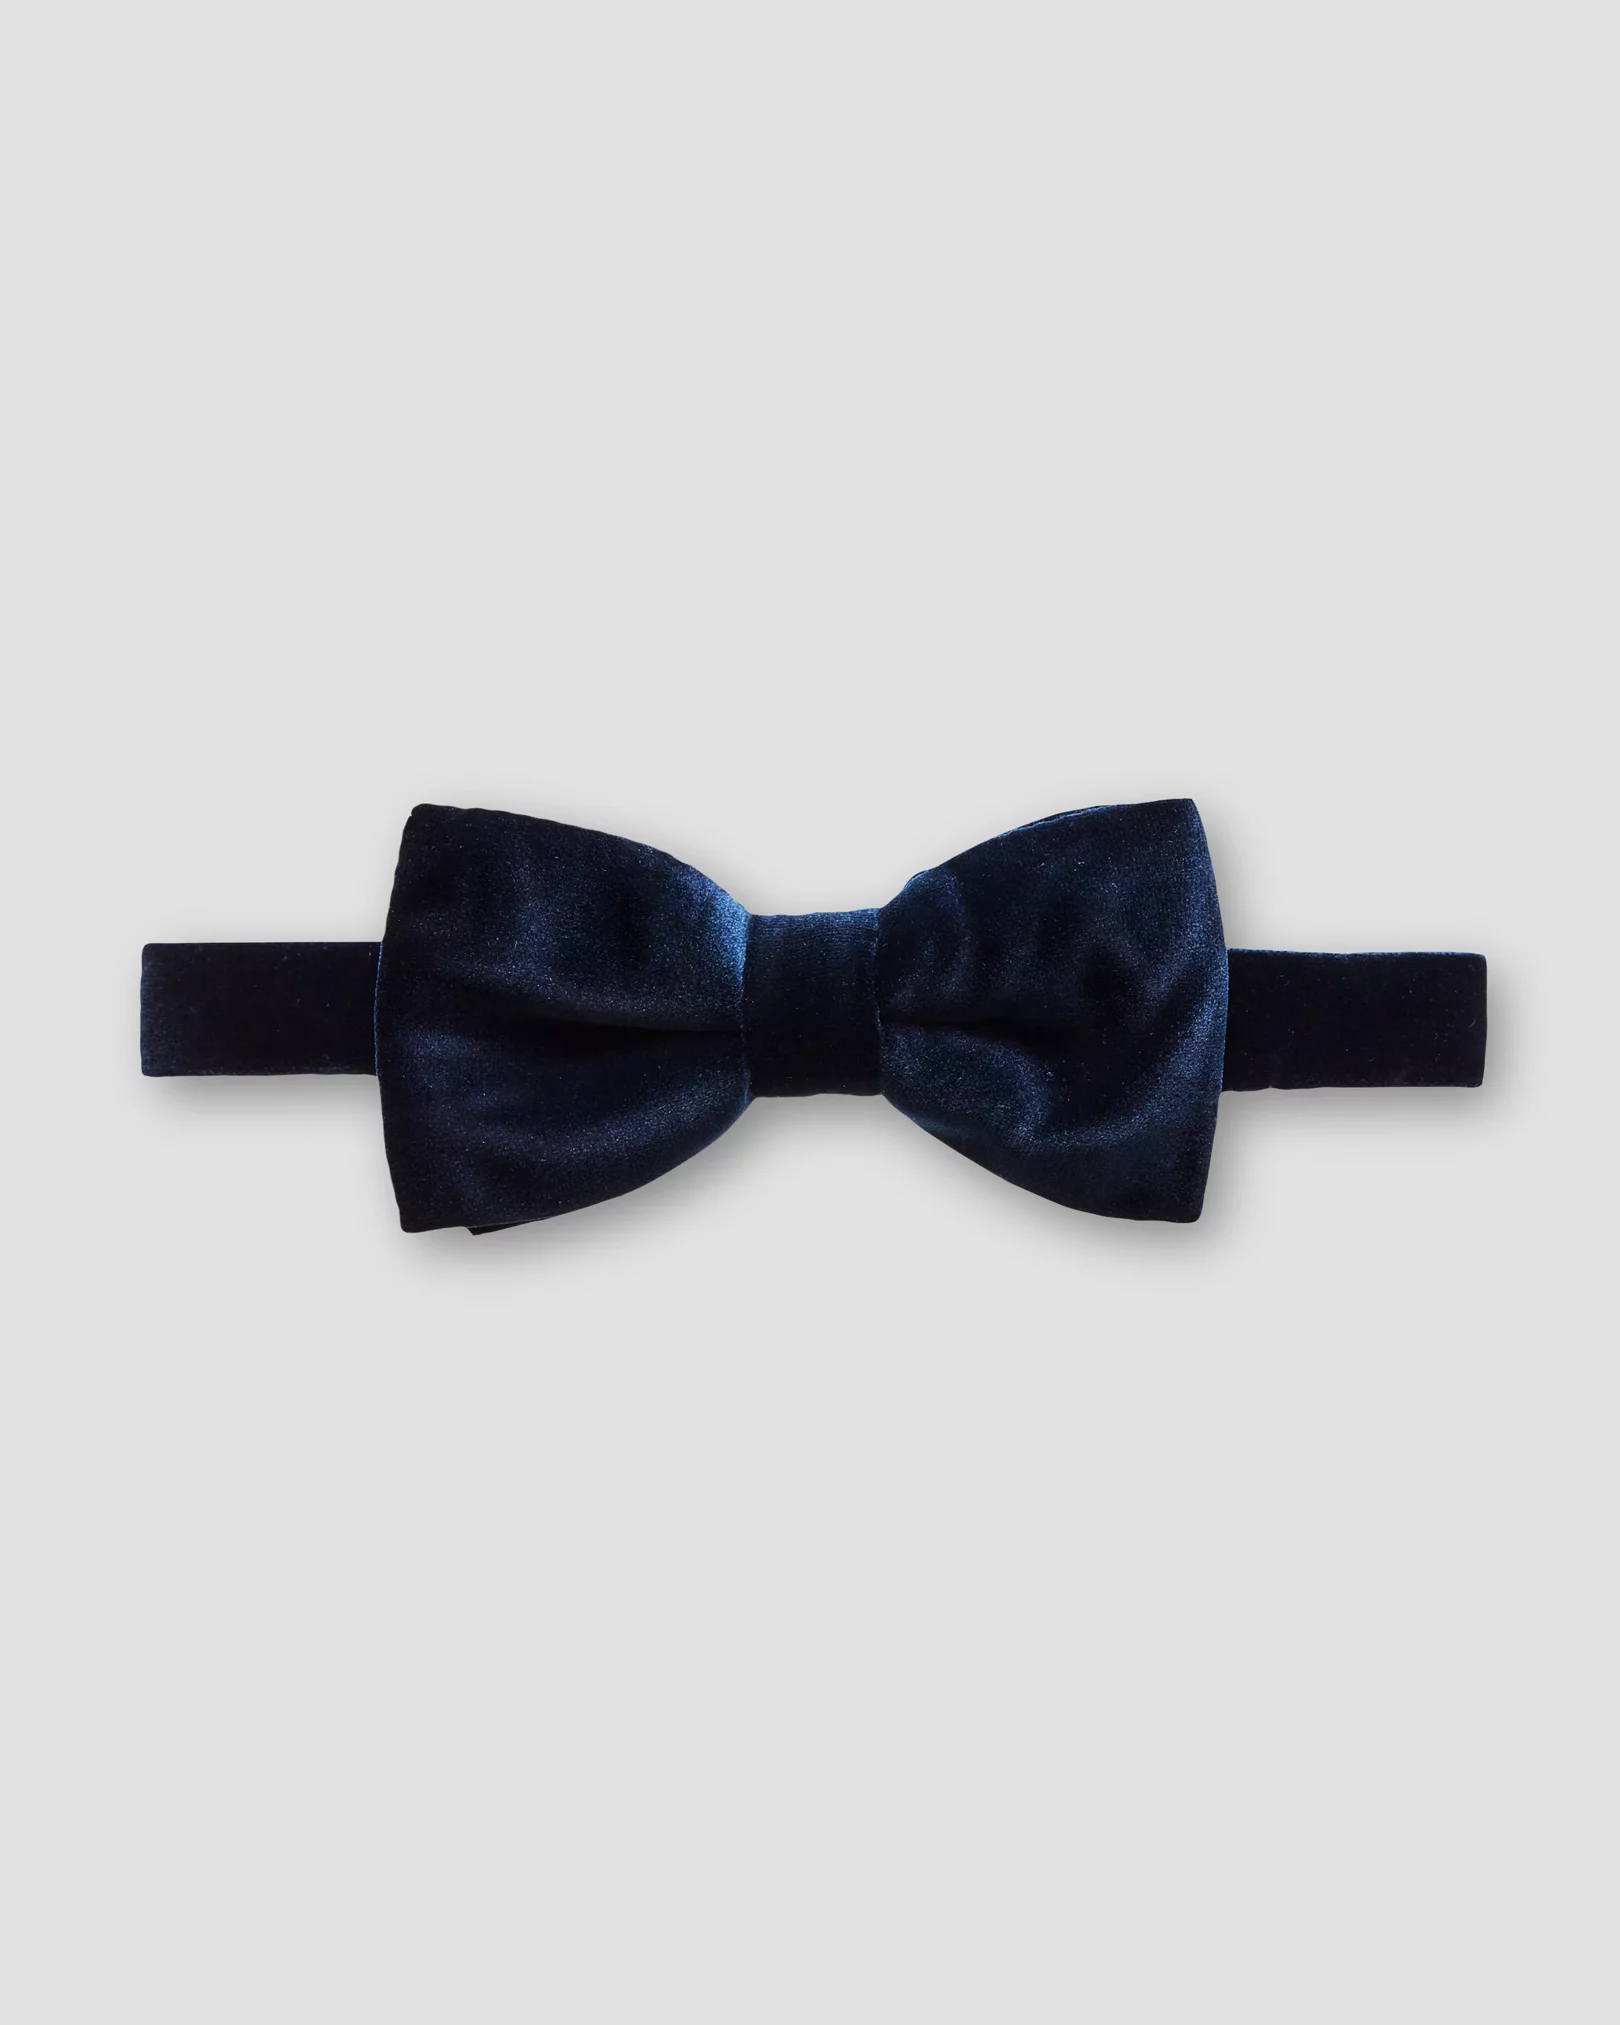 Eton - navy velvet bow tie ready tied